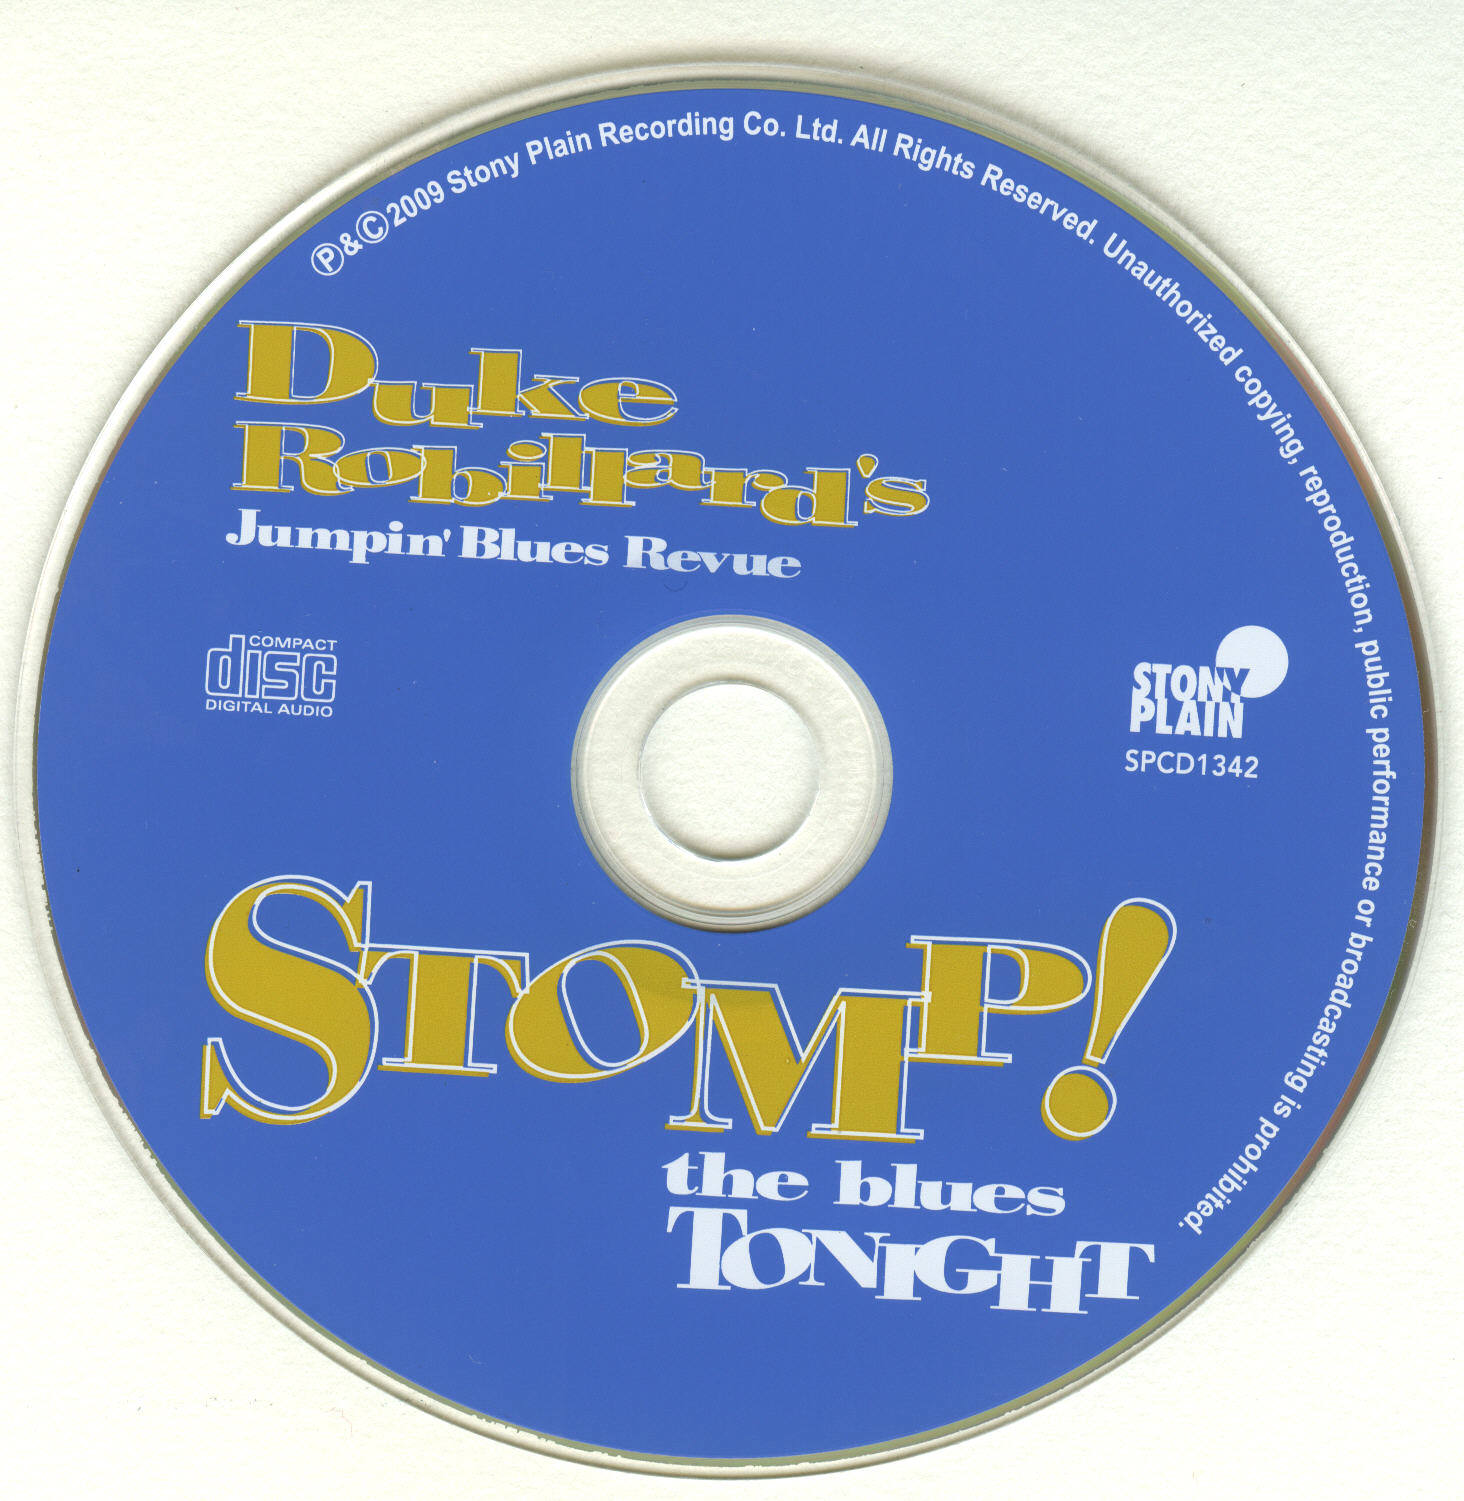 Duke Robillard's Jumpin' Blues Revue - 2009 - STOMP! The Blues Tonight